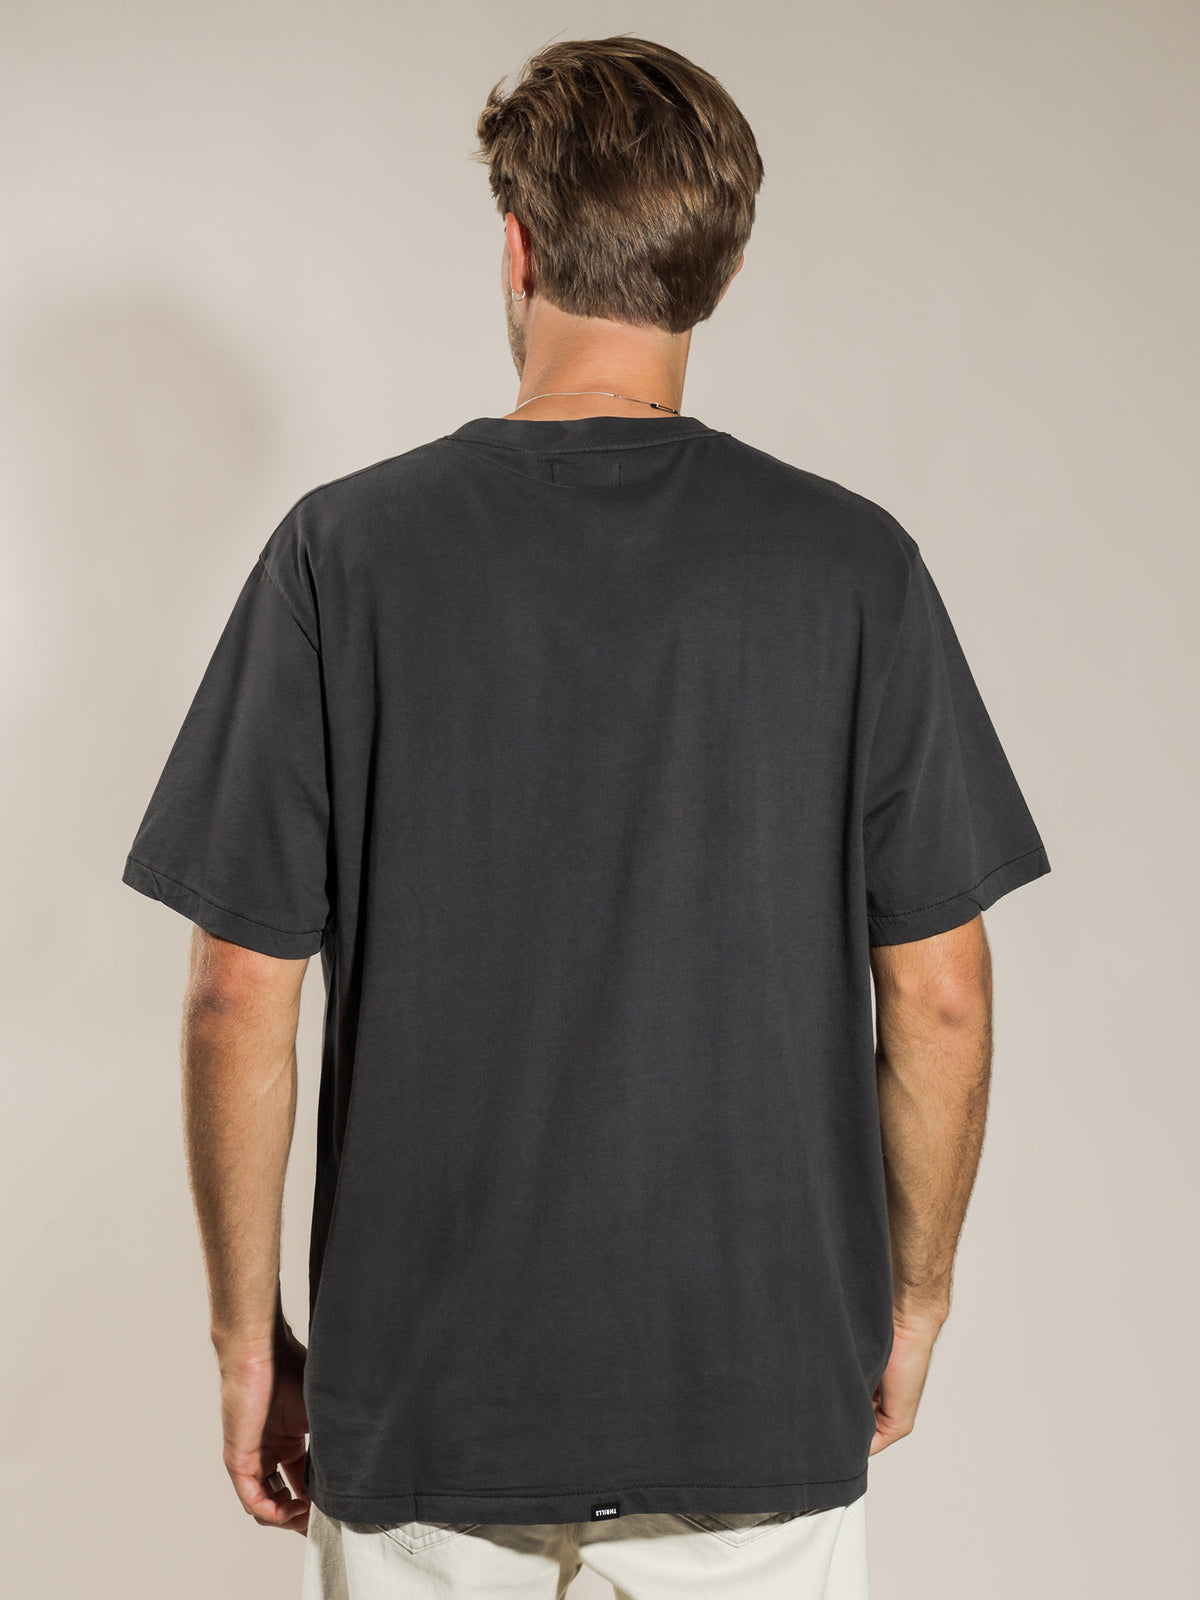 Minimal Merch T-Shirt in Heritage Black